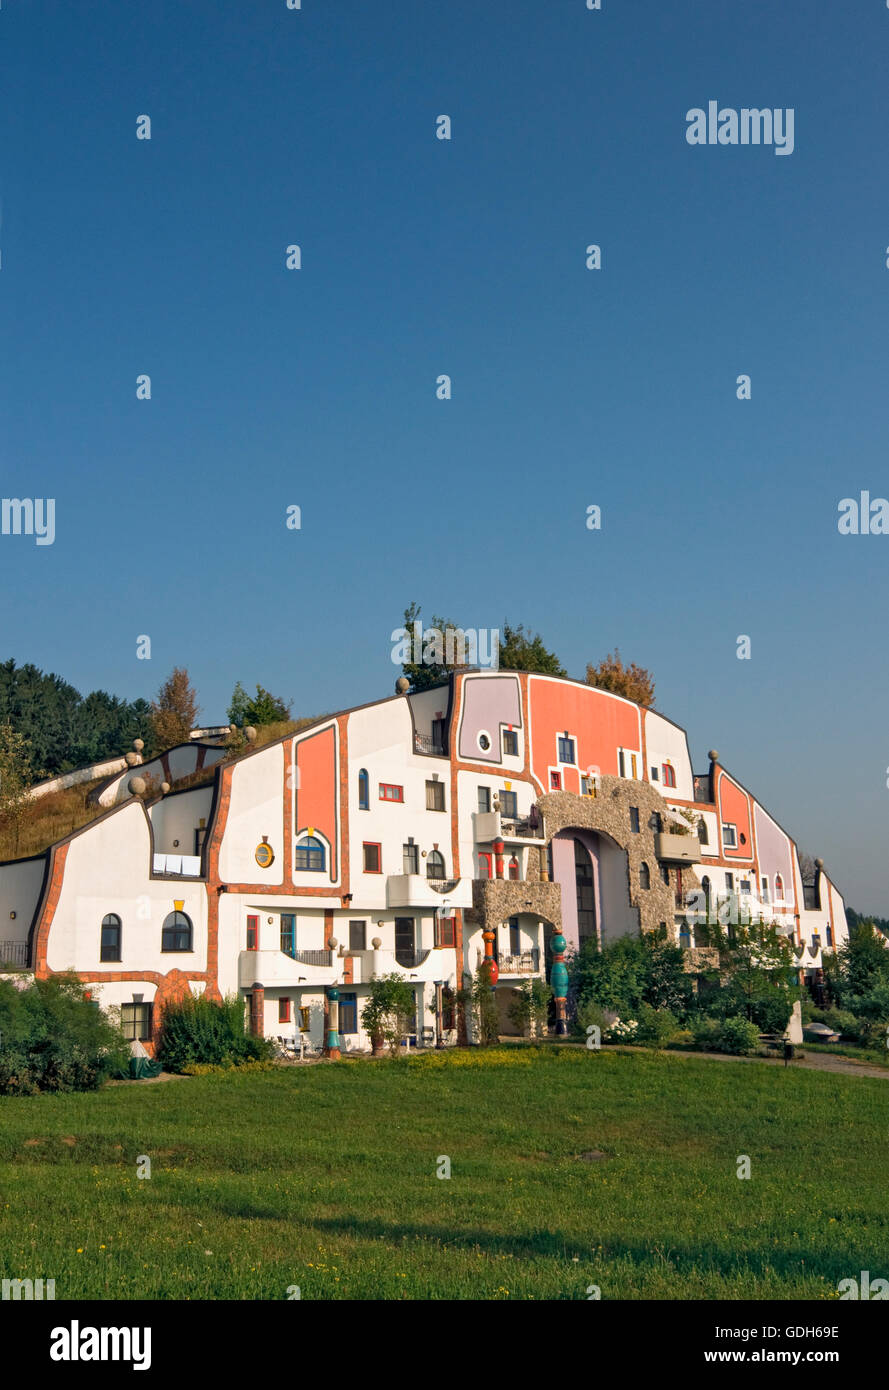 Steinhaus, Stone House of the Rogner Bad Blumau hotel complex, designed by architect Friedensreich Hundertwasser Stock Photo